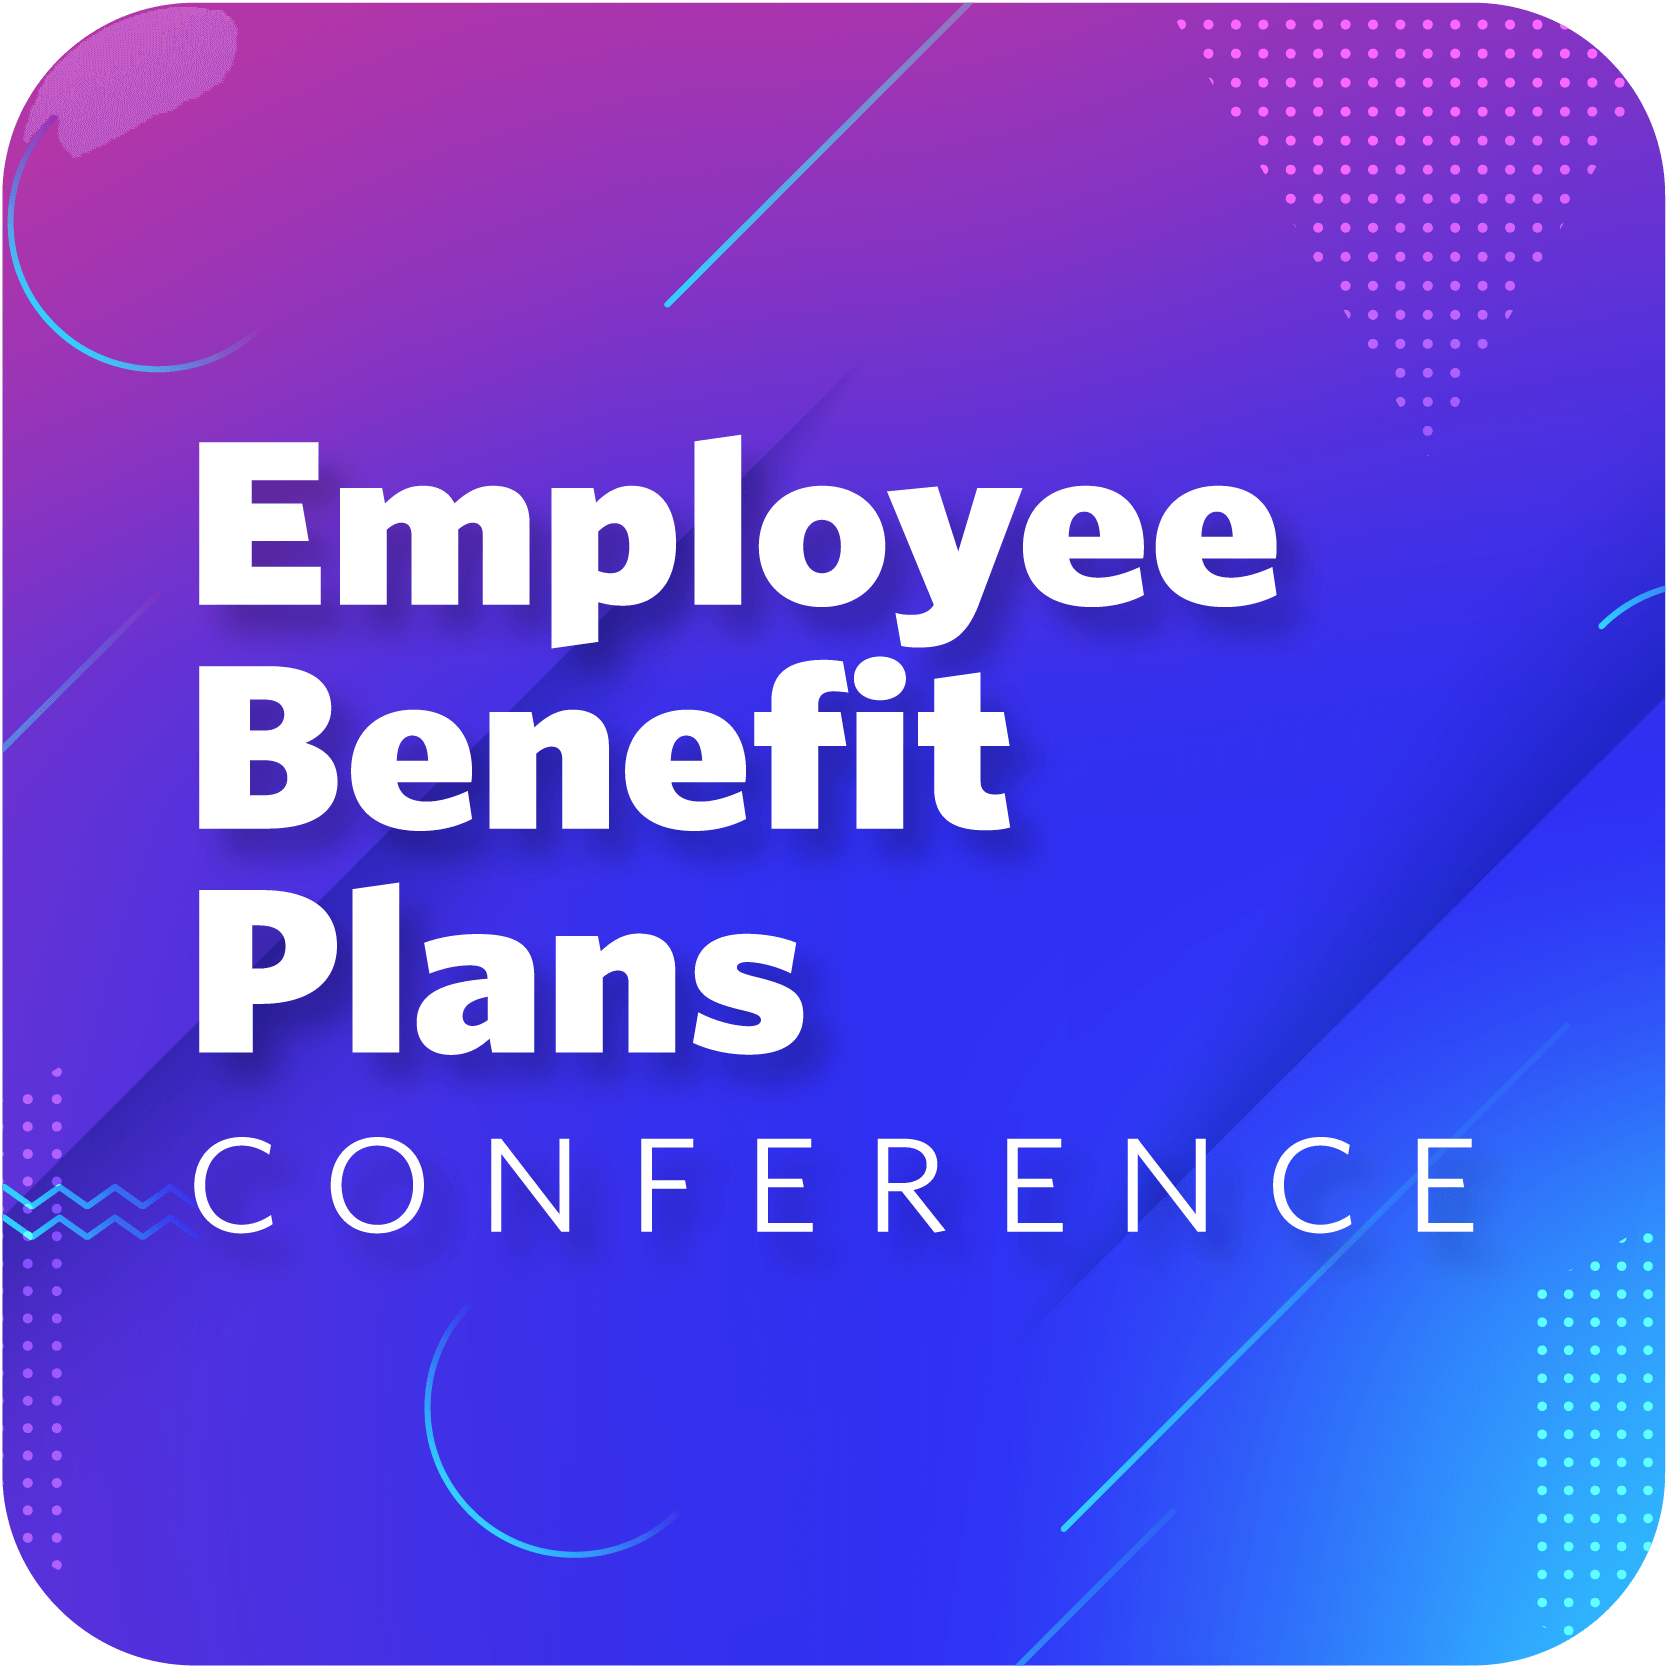 Employee Benefit Plans Conference Schedule 2022 Details